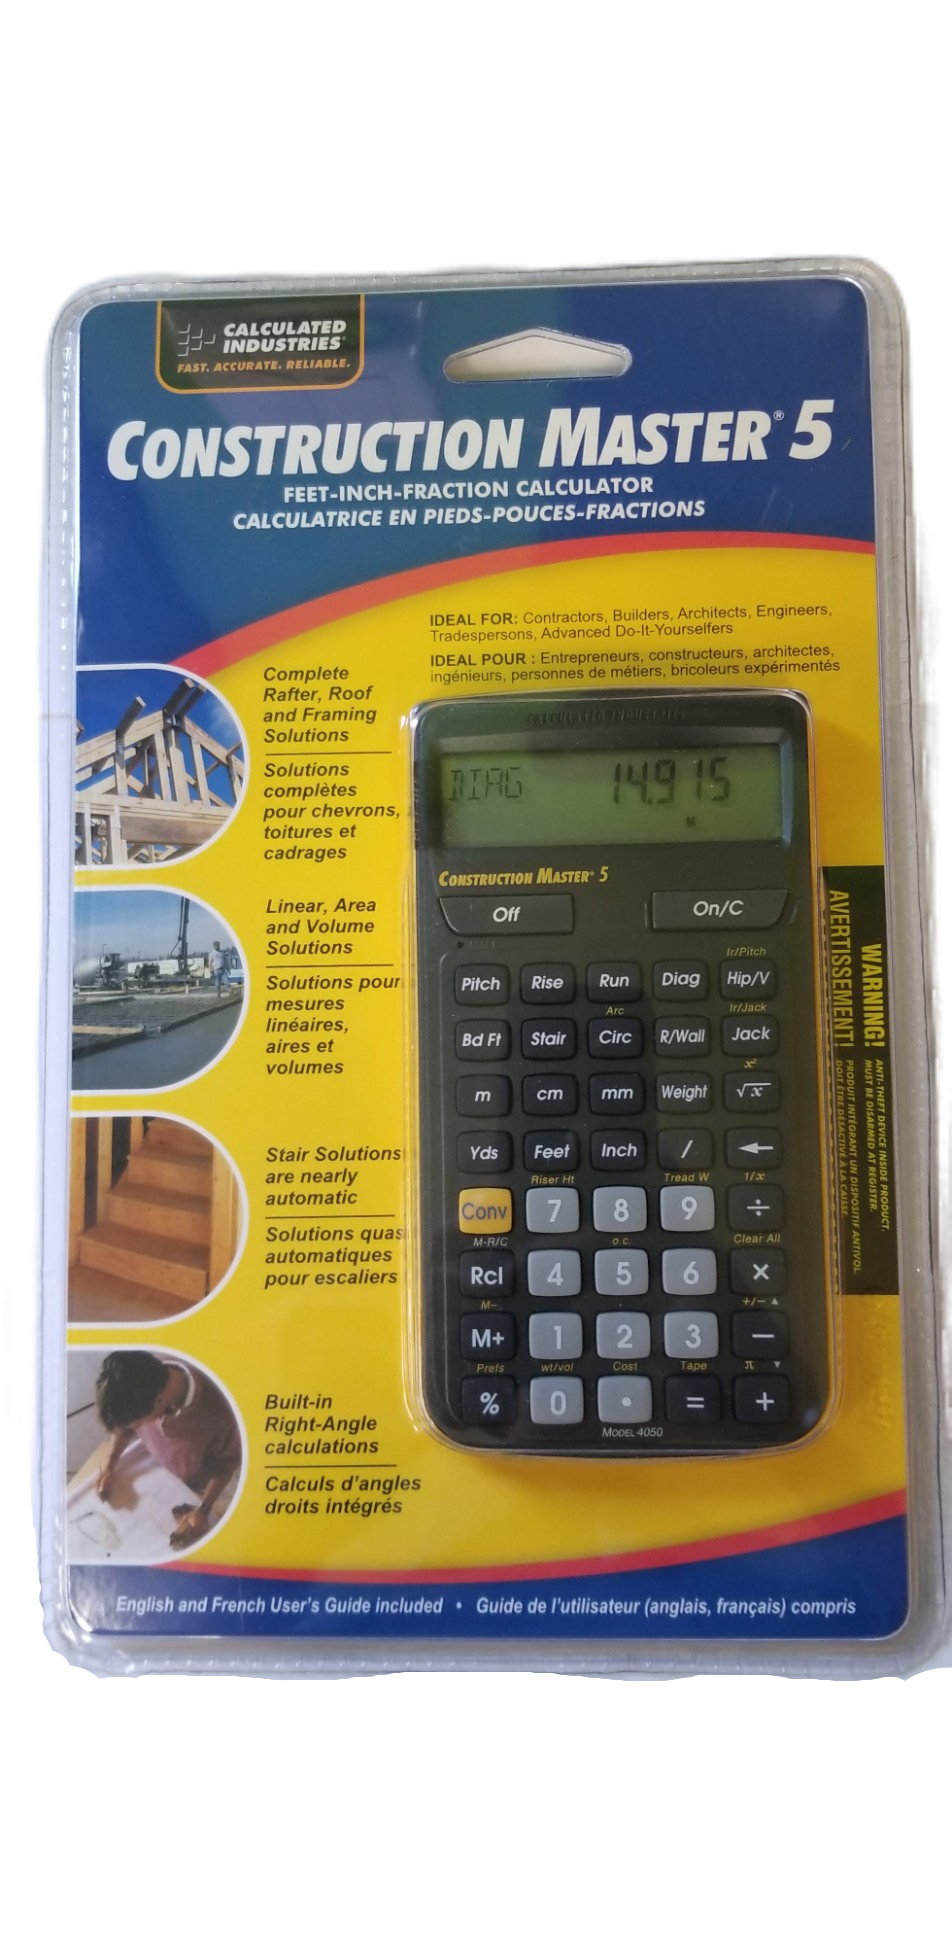 Construction Master 5 calculator